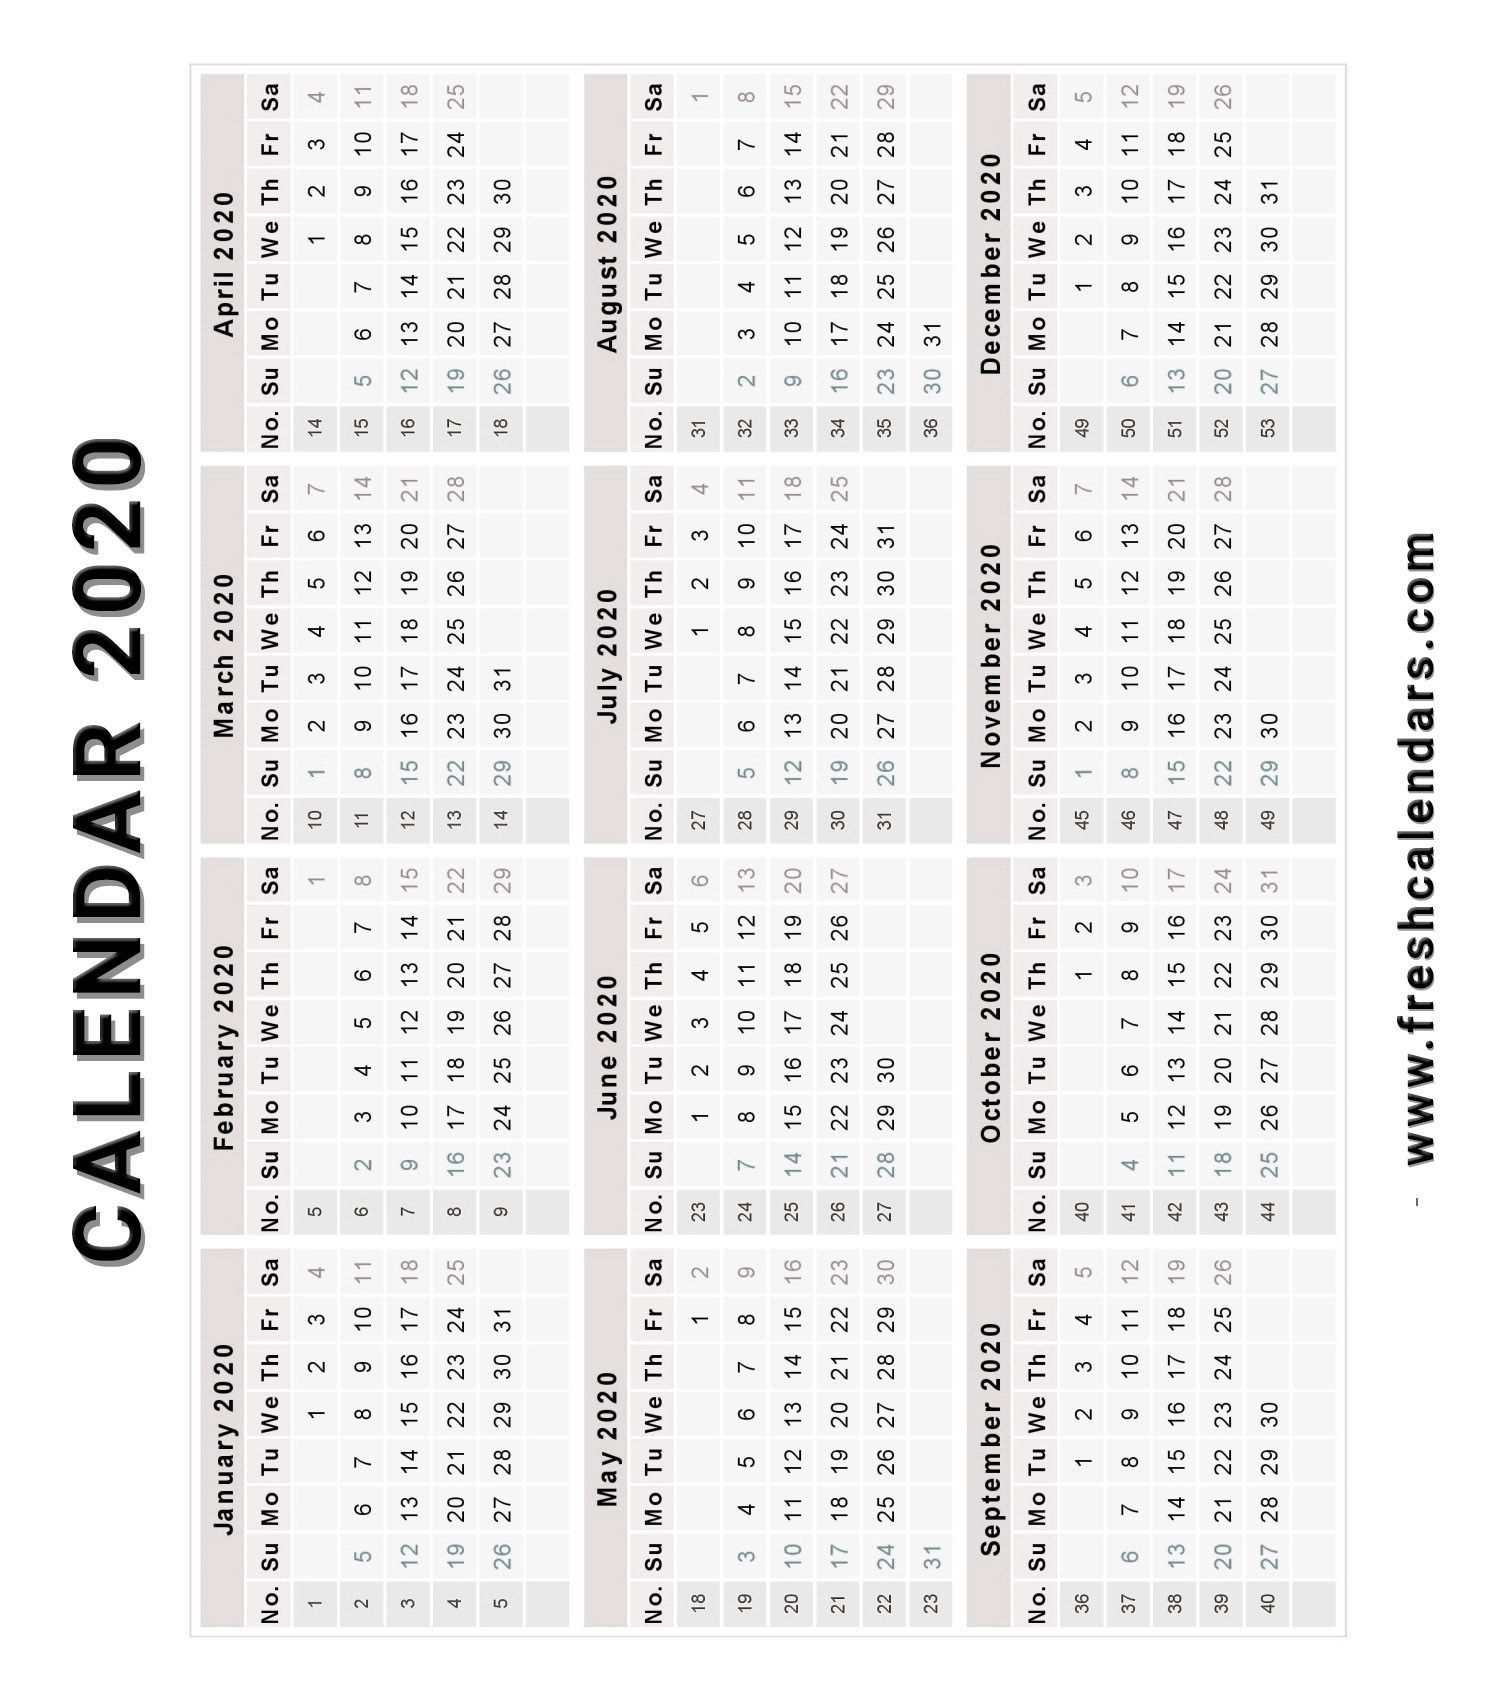 2020 Calendar Remarkable 2020 Calendar With Moon Phases